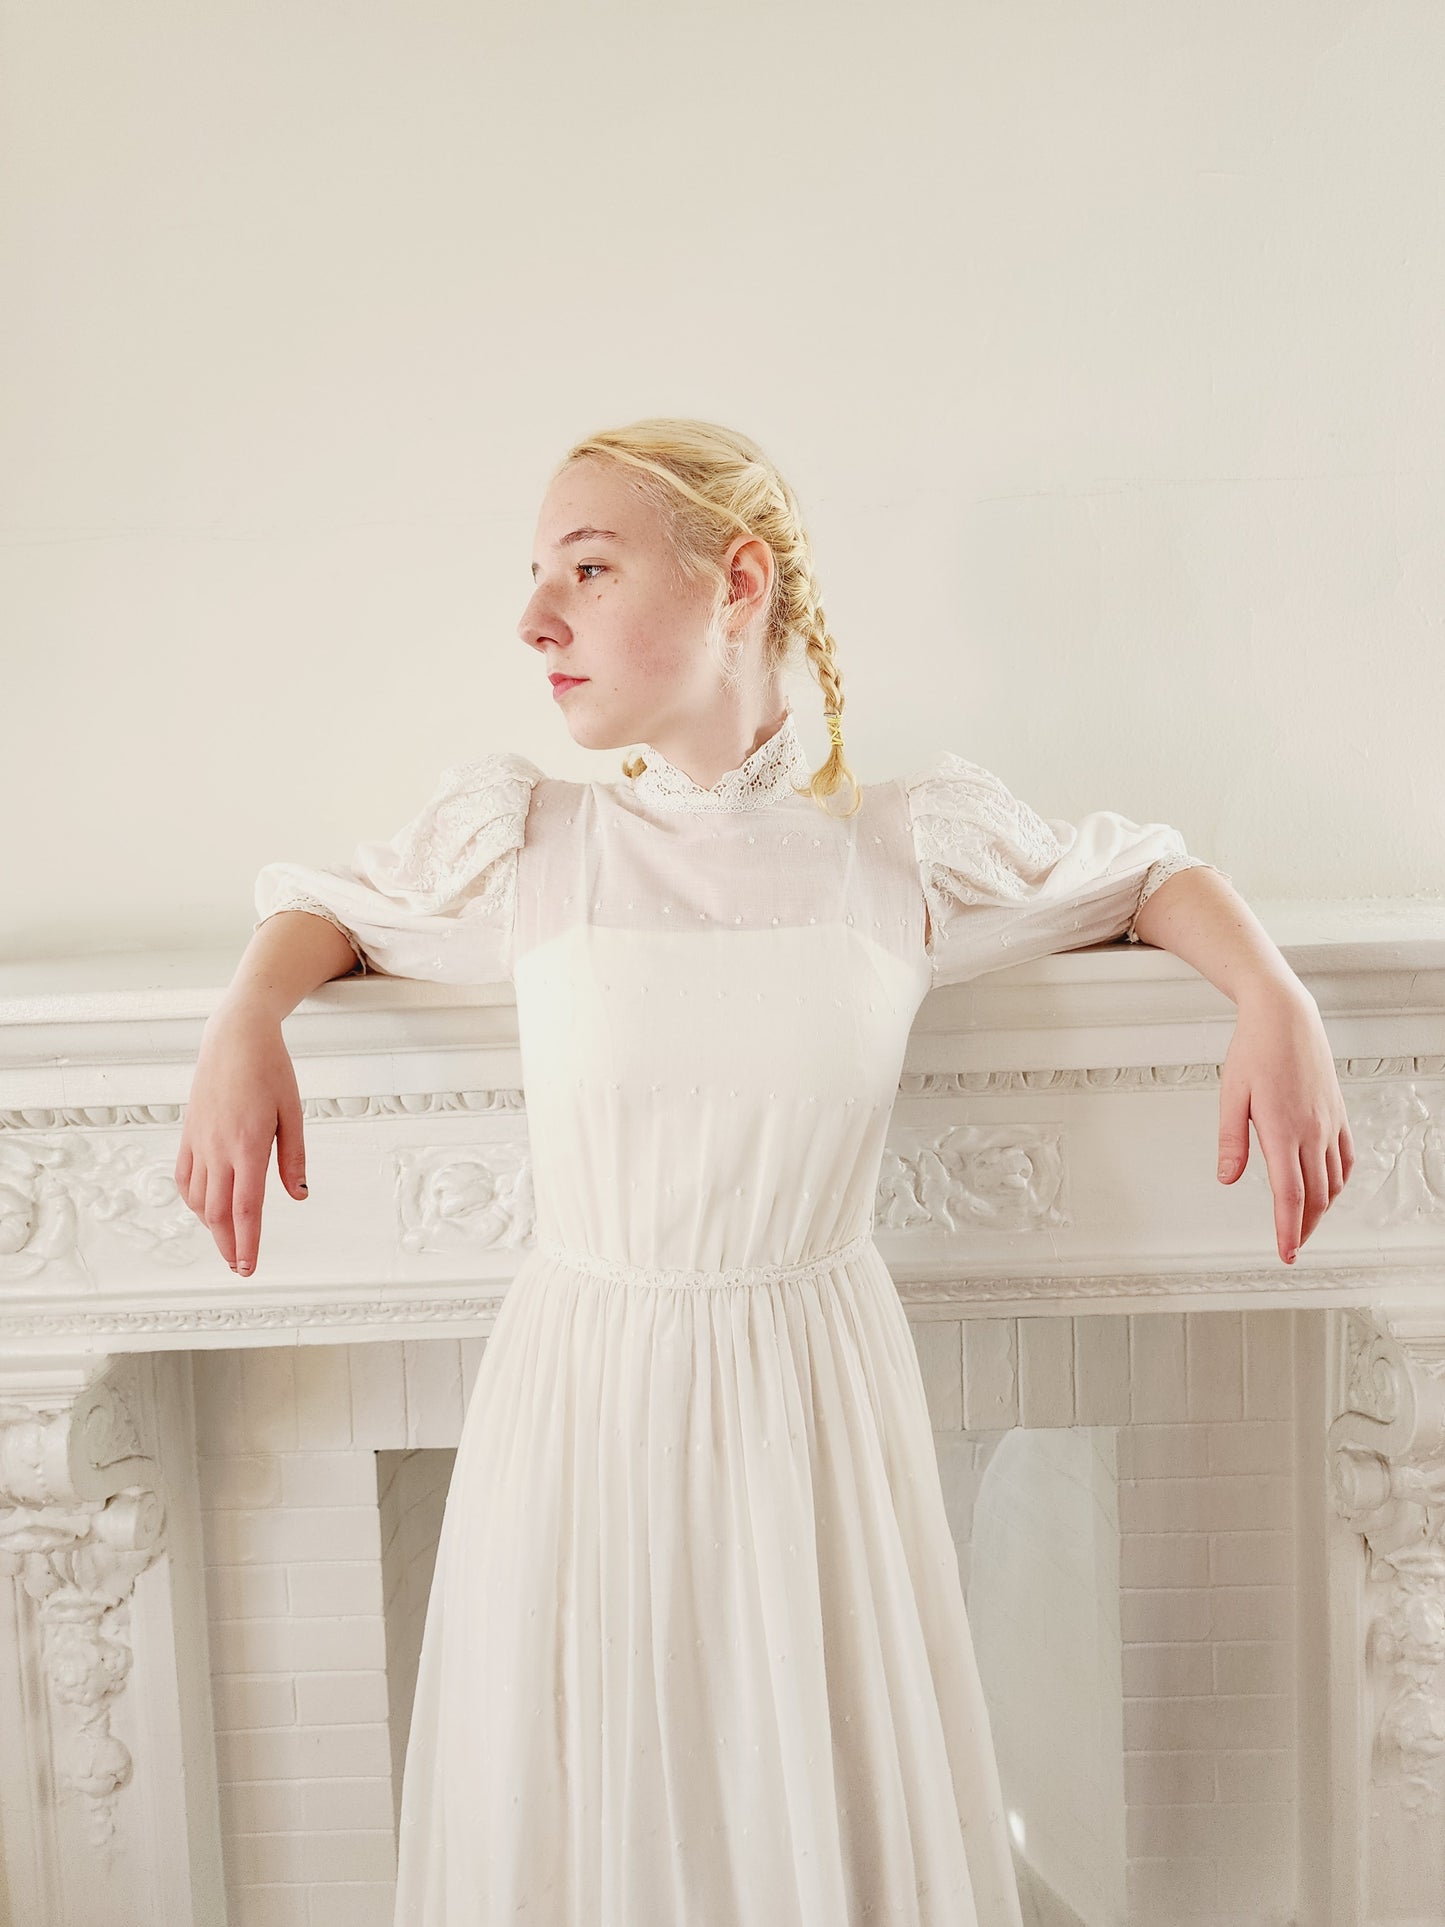 70s White Maxi Dress Neo Edwardian Meets Prairie Style Dotted Swiss & Eyelet Cotton XS